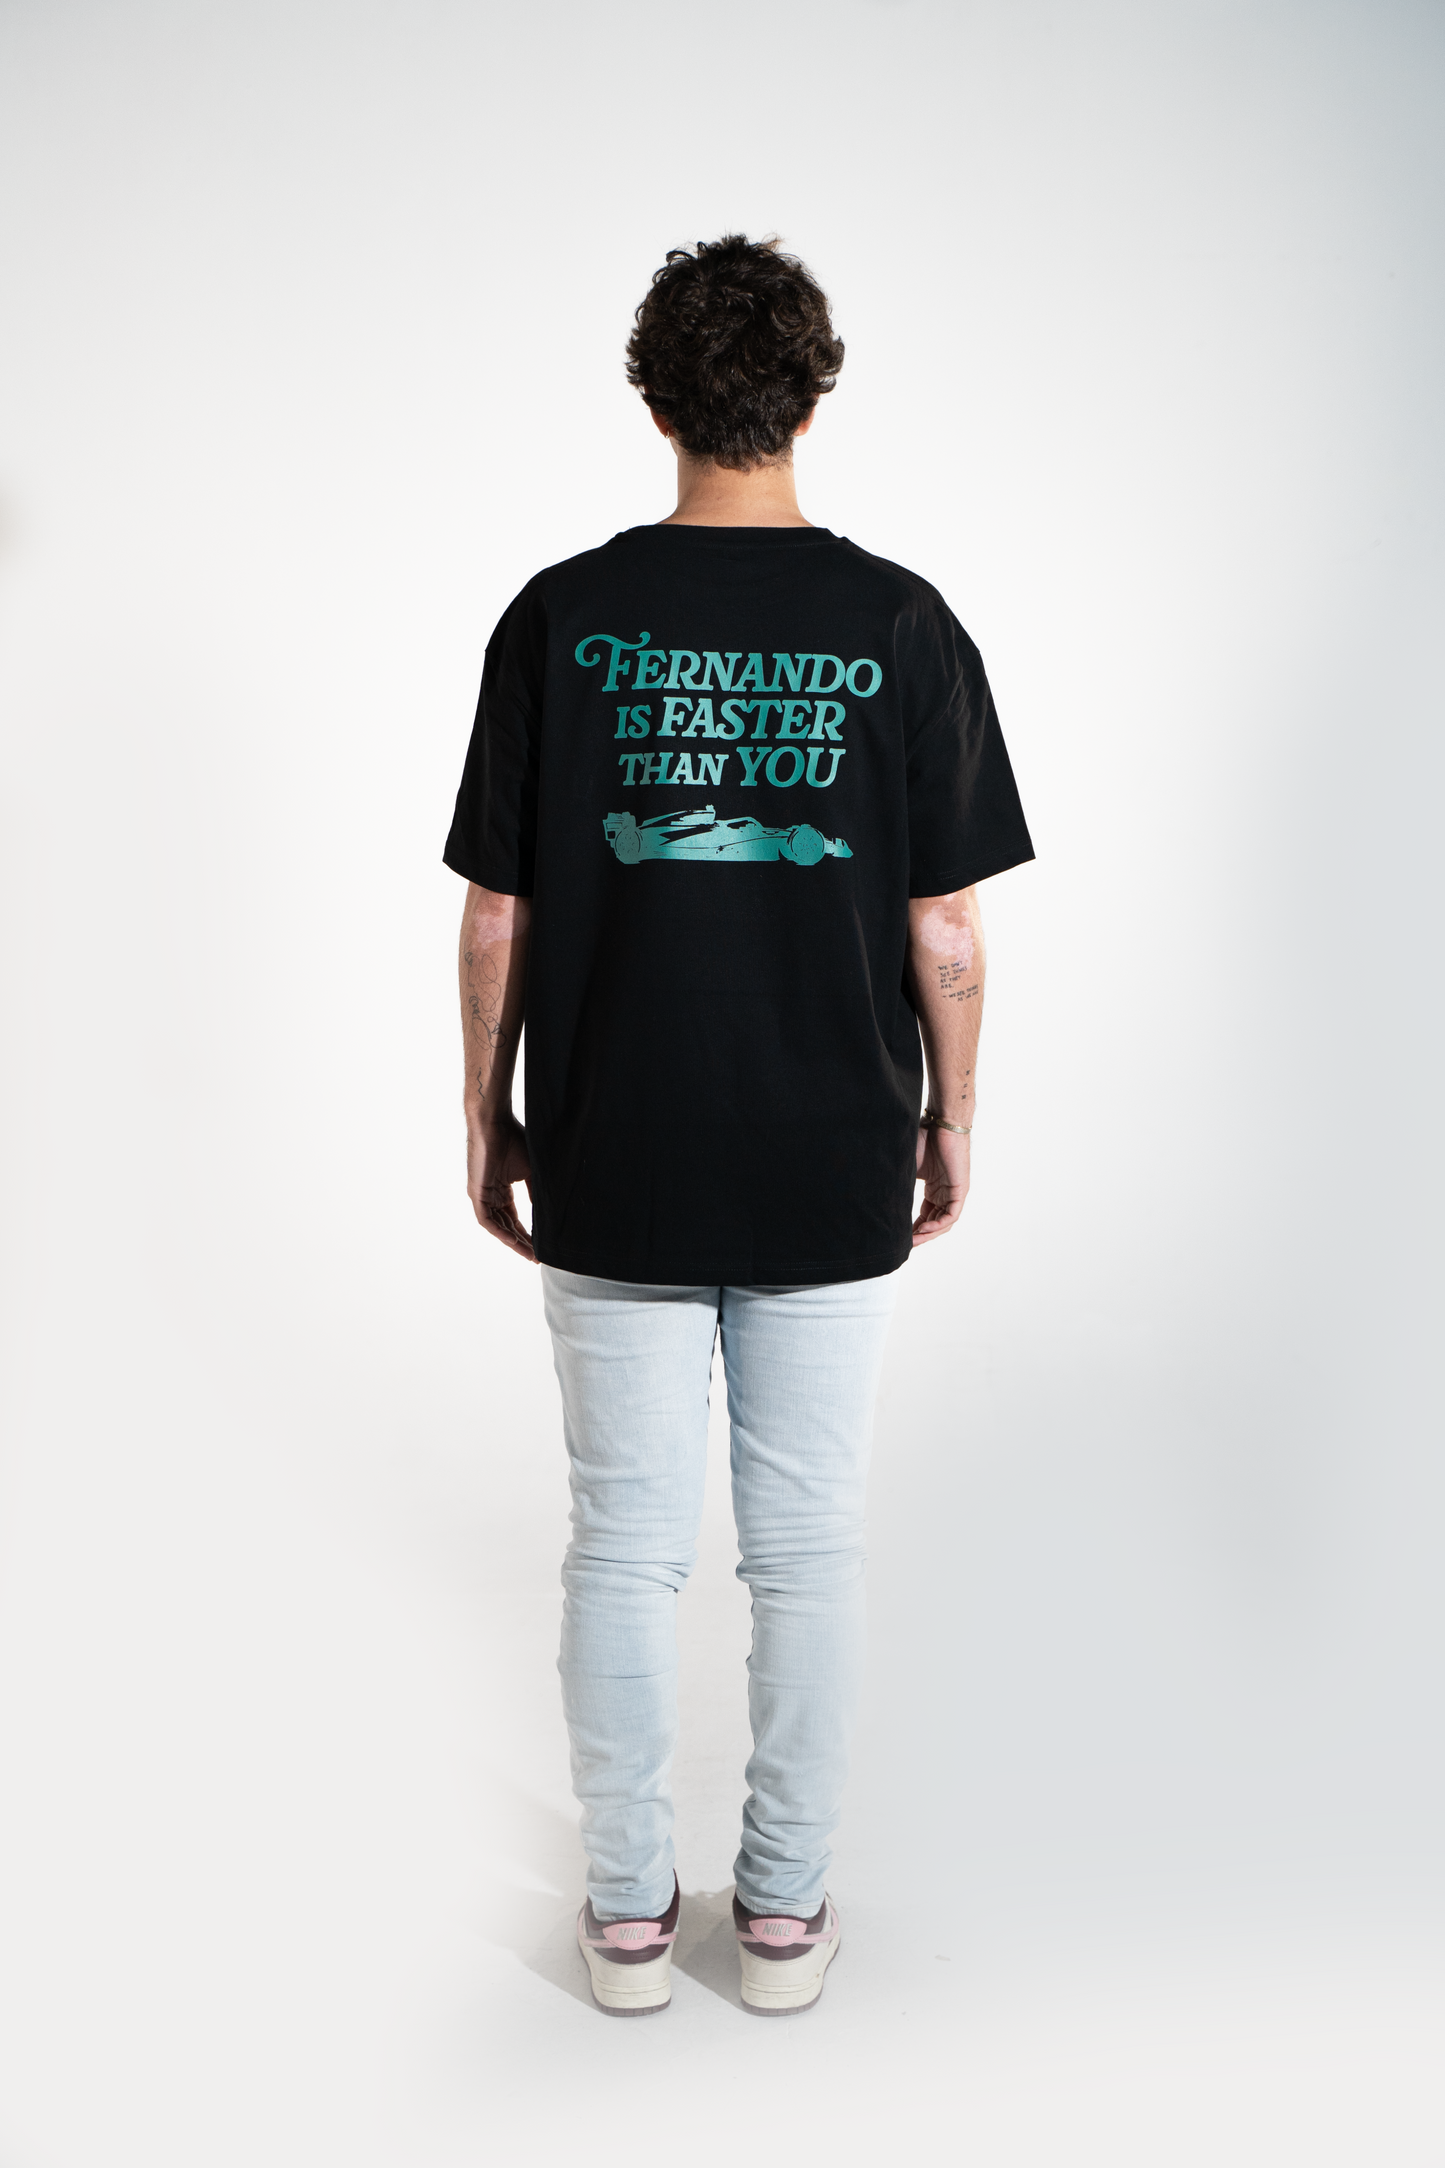 Camiseta FERNANDO IS FASTER THAN YOU